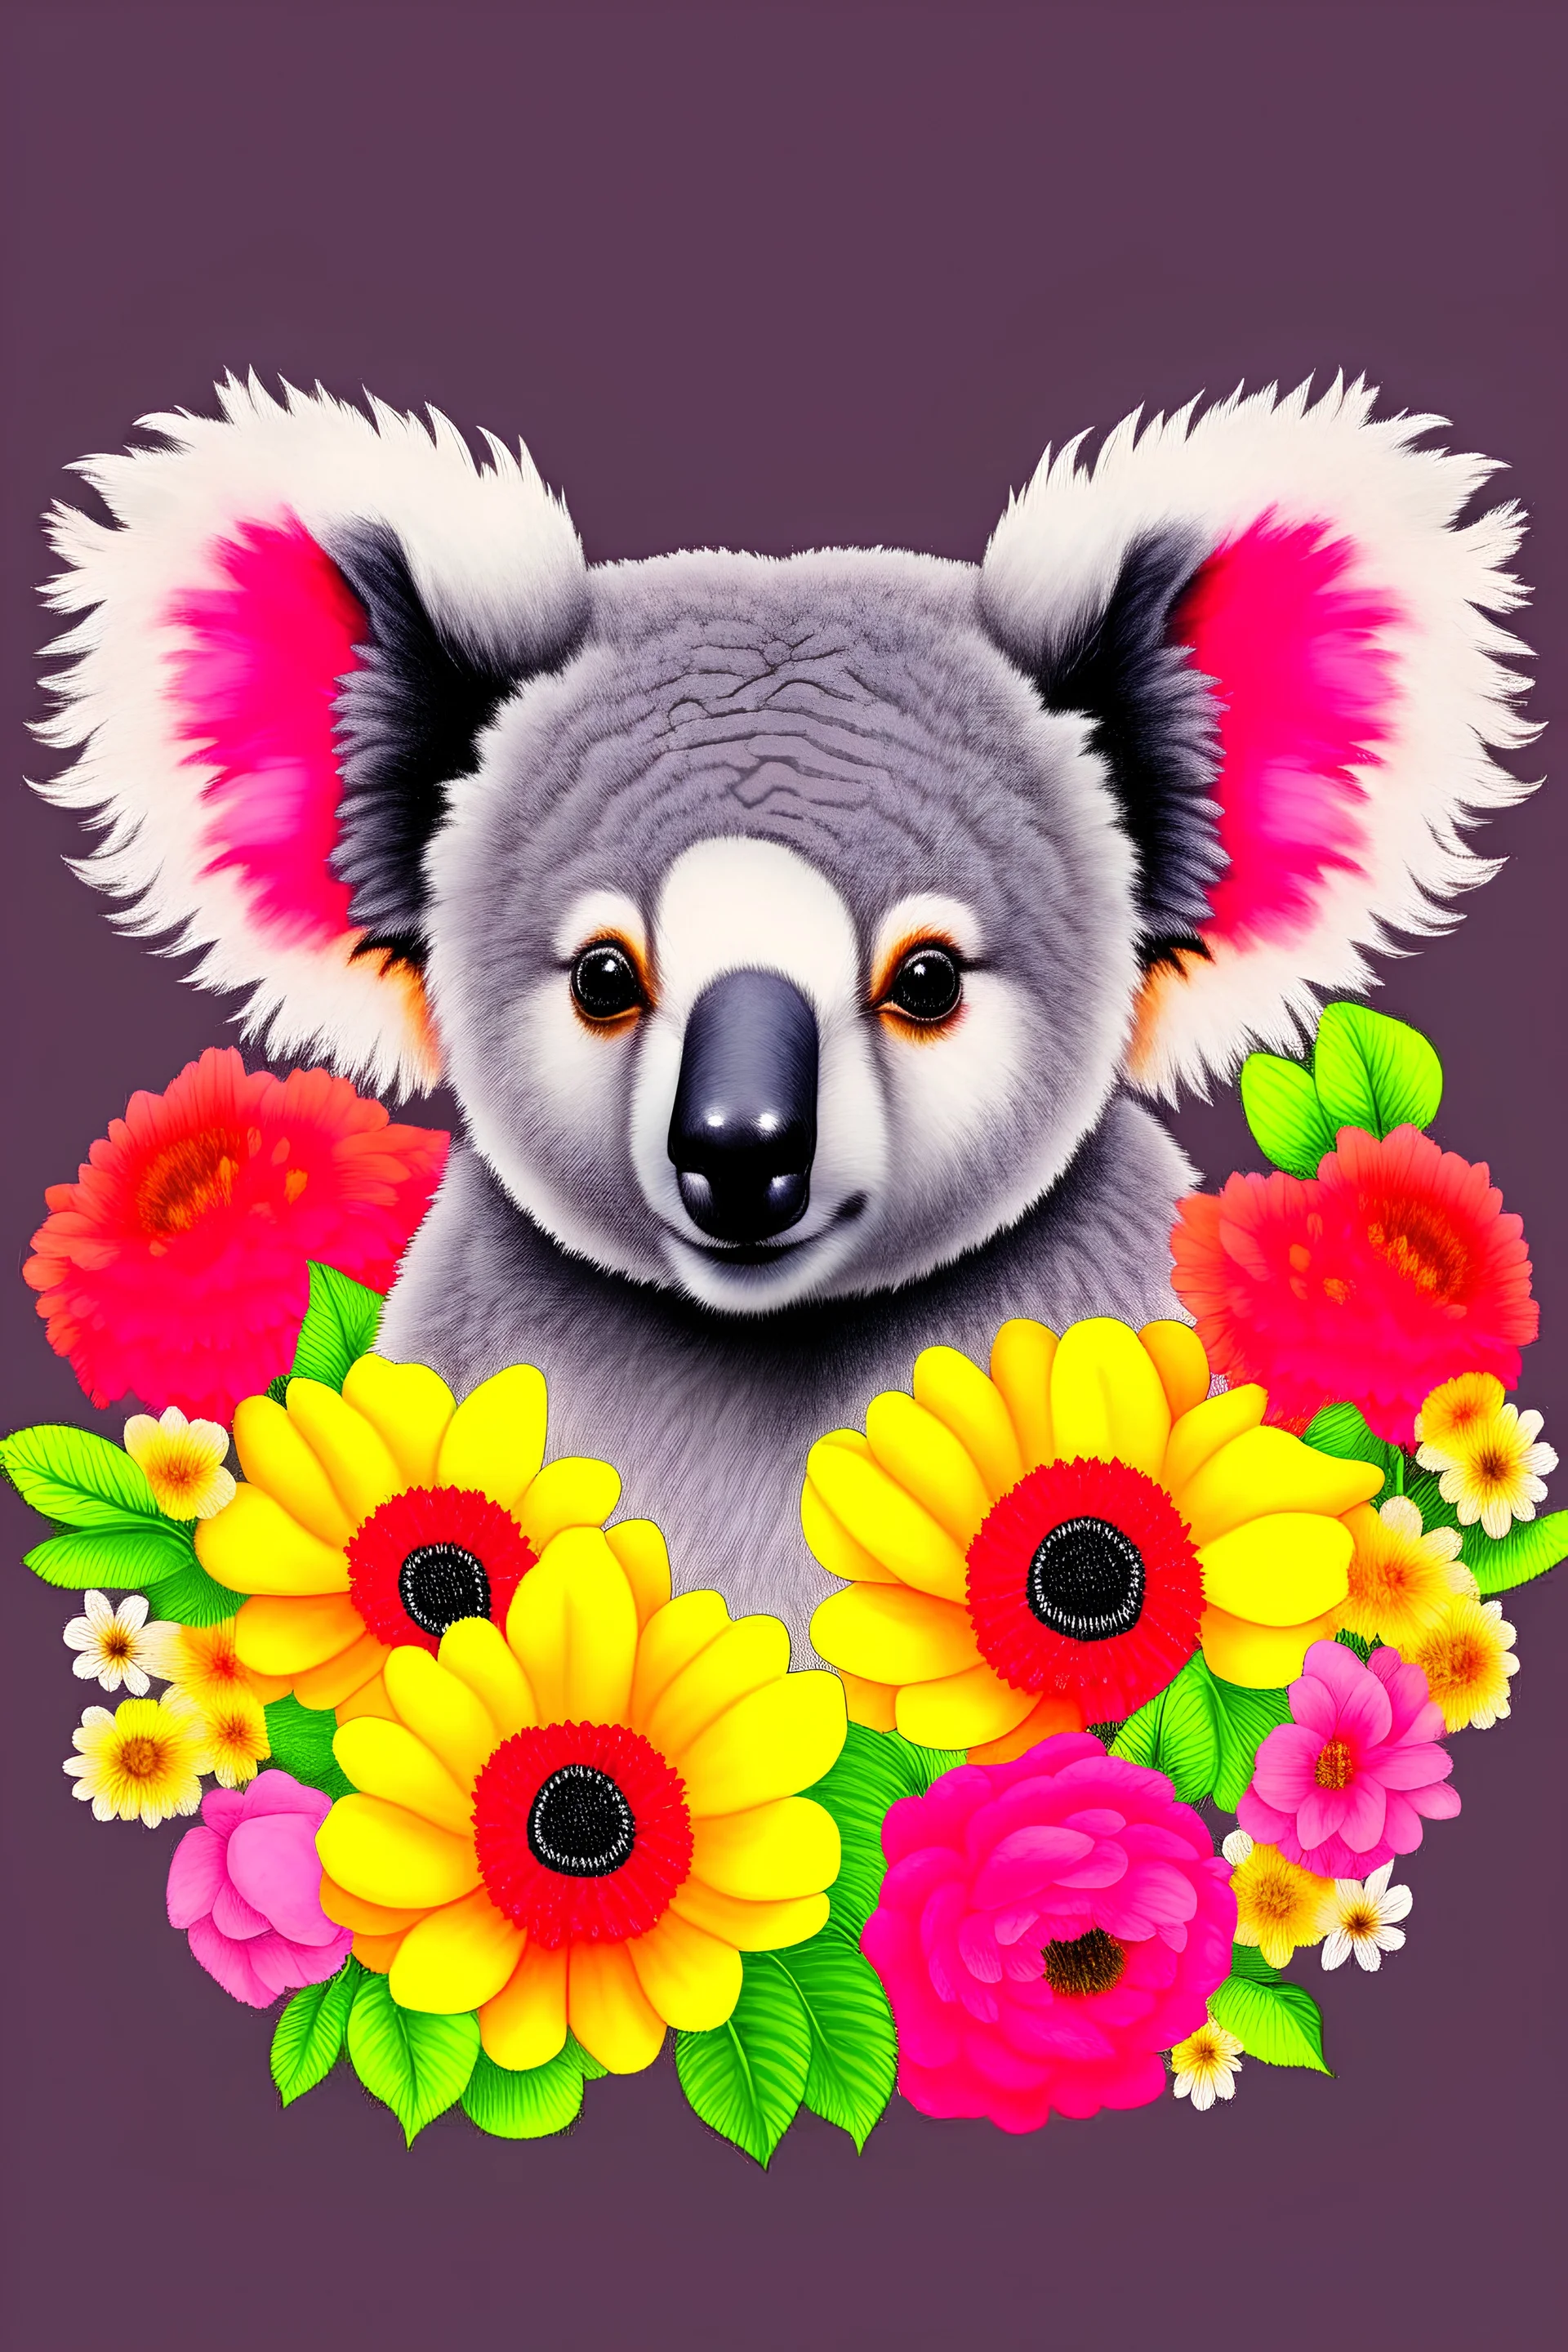 Koala with flowers